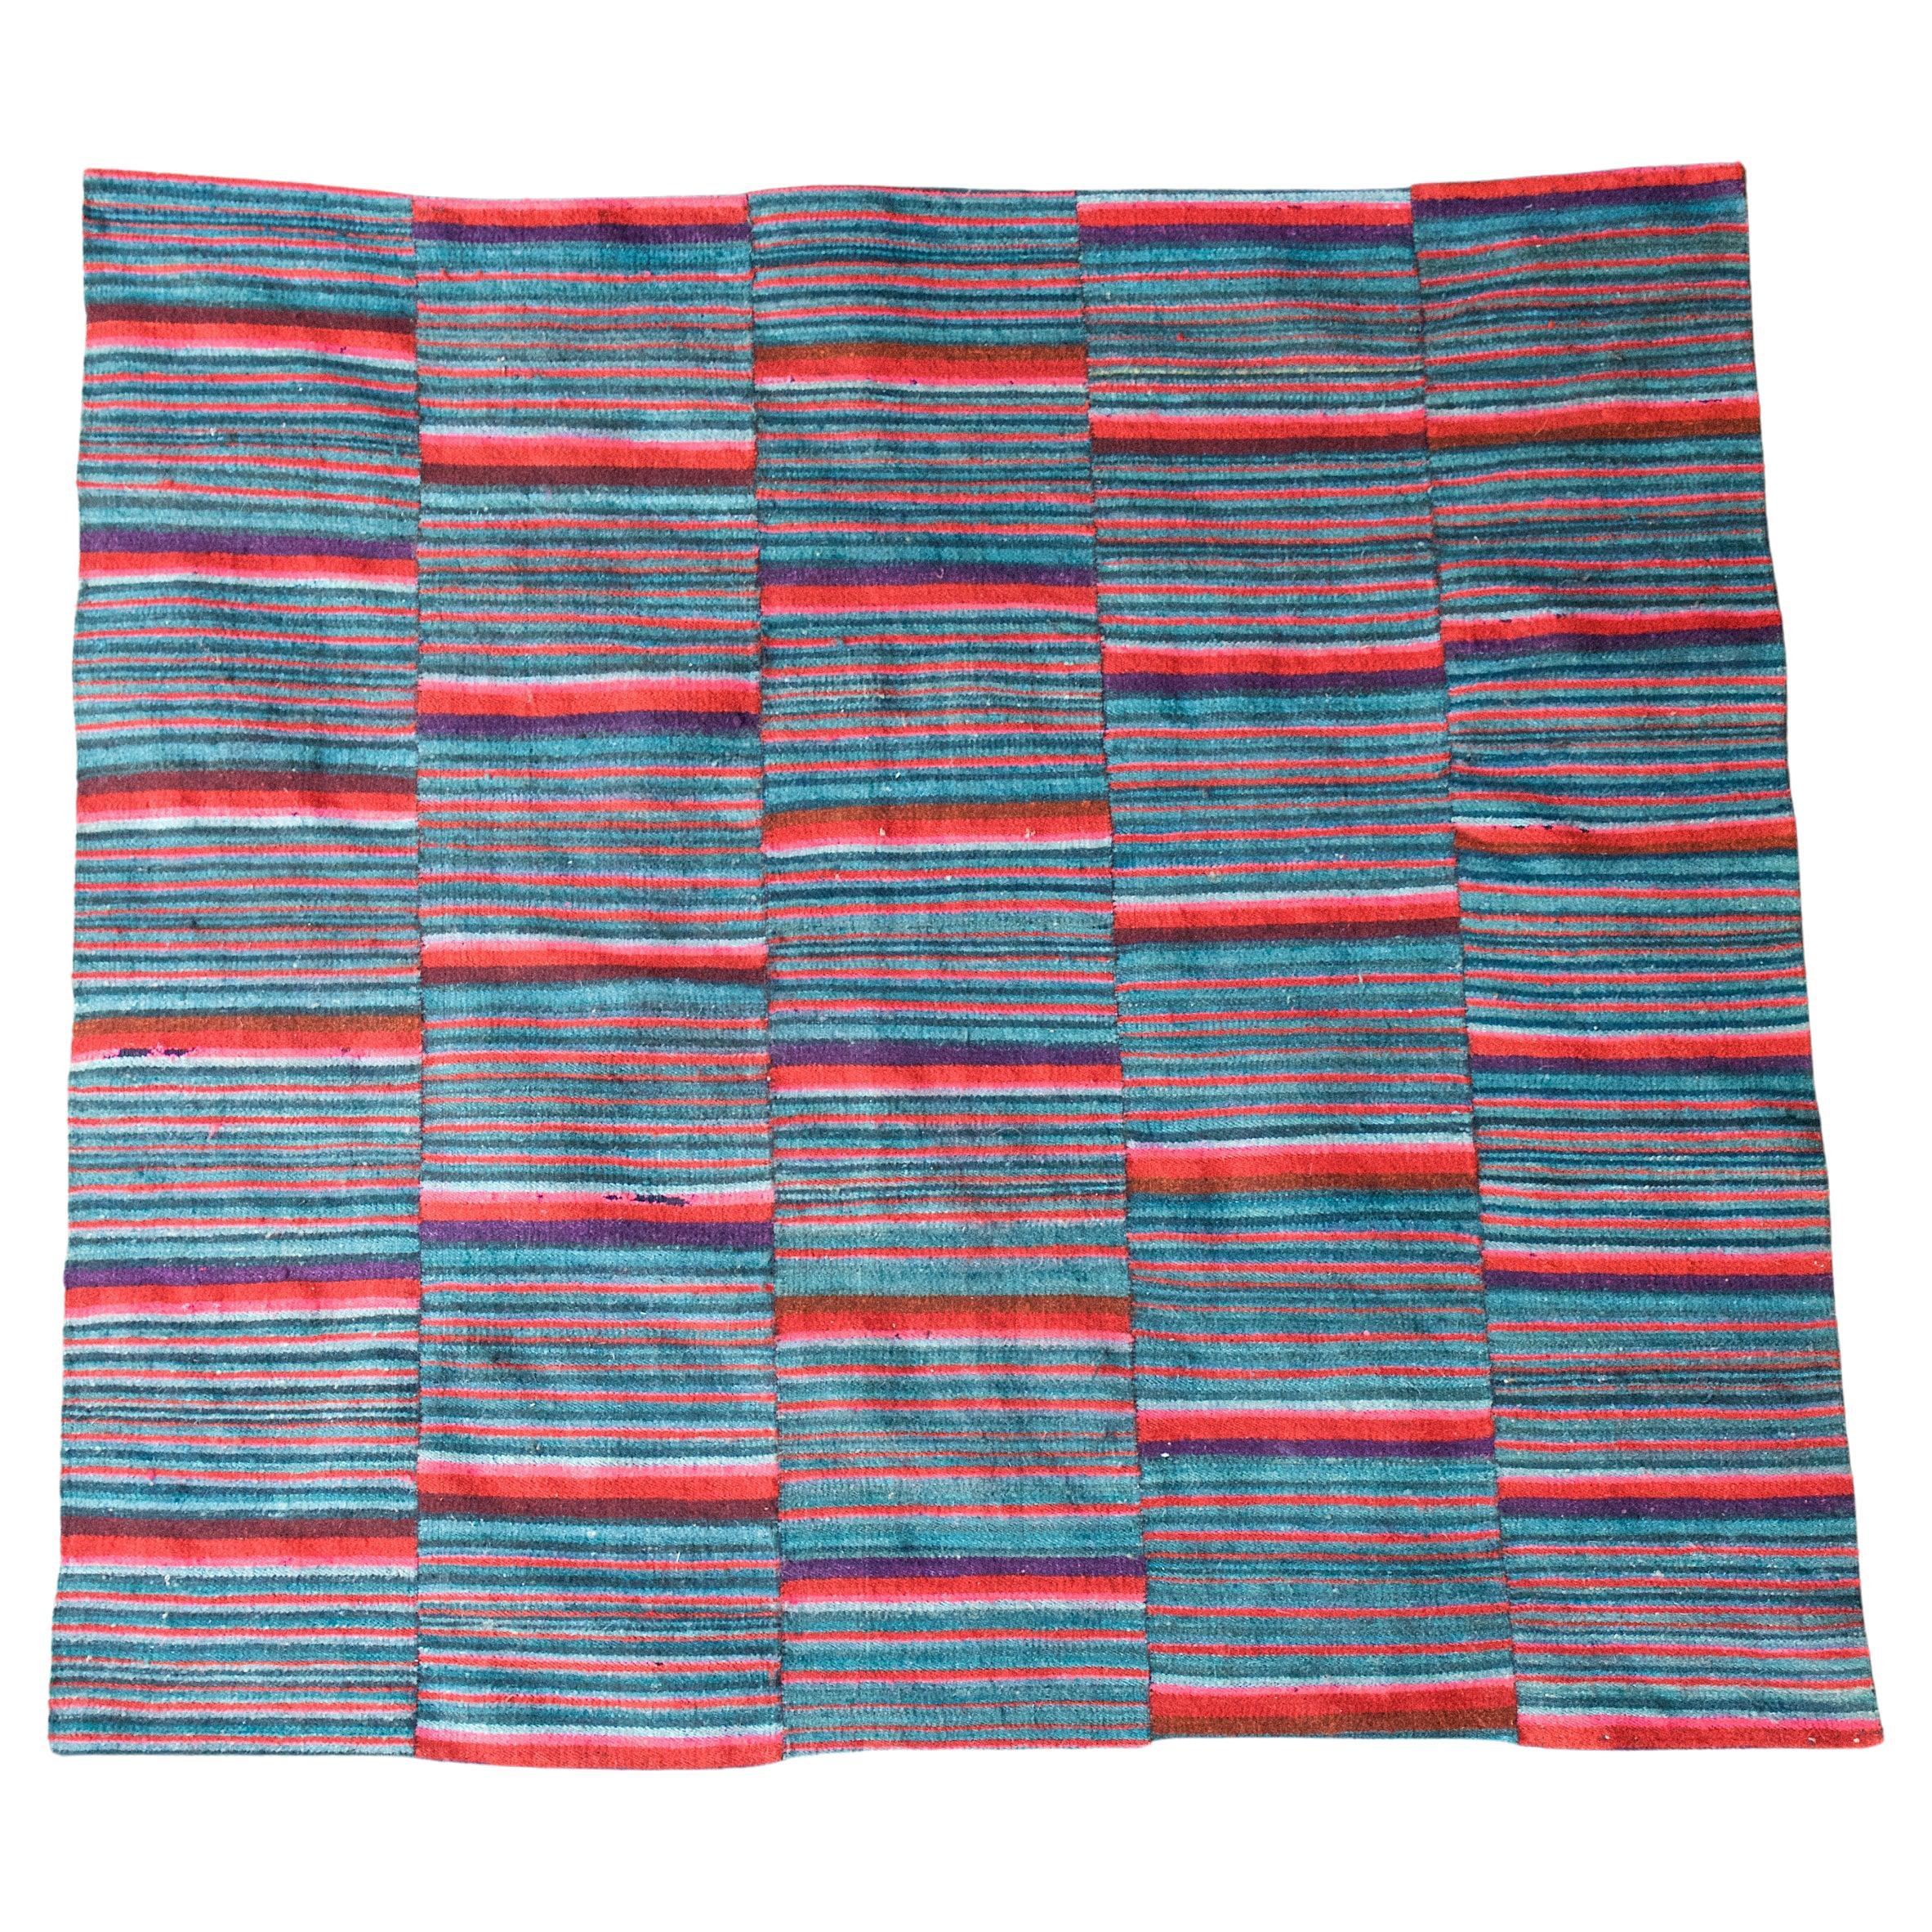 Eastern Vibrant Patchwork Kilim Wall Hanging Stripe Geometric Pattern Flat Weave For Sale